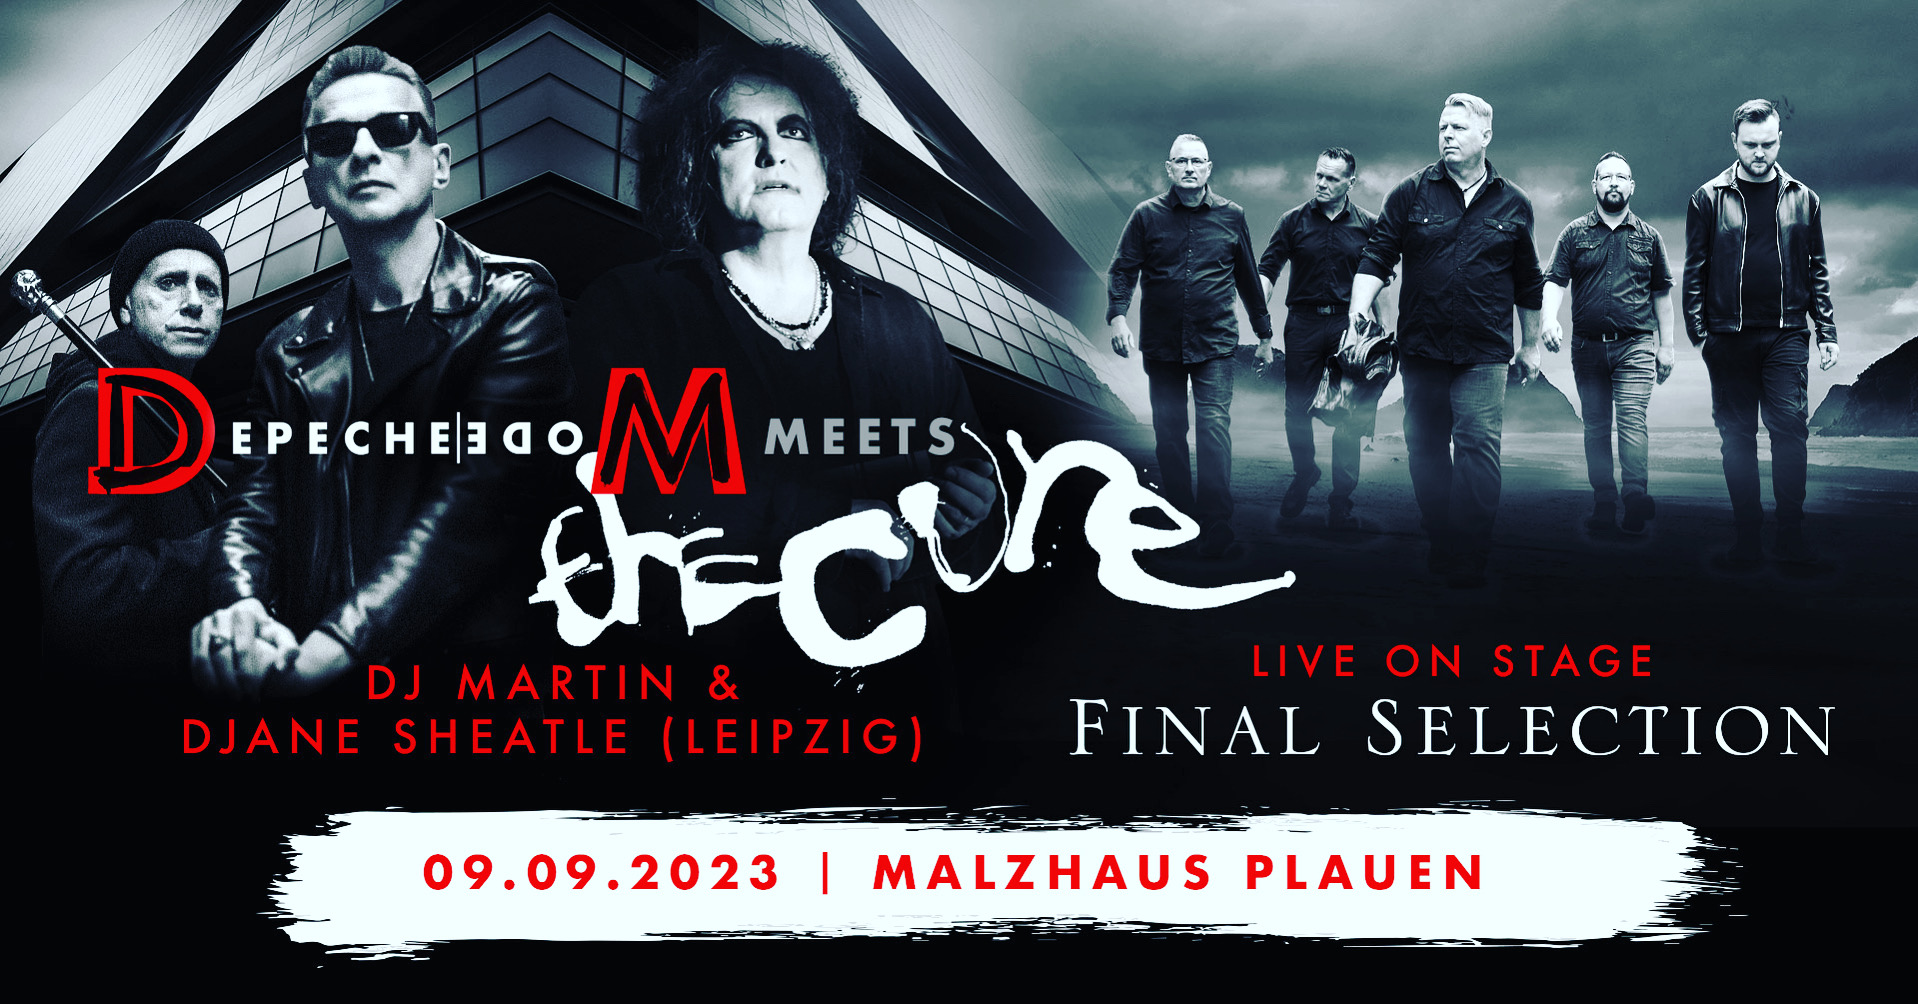 Depeche Mode meets The Cure Party - Music for the Masses Vol. IX im Malzhaus Plauen